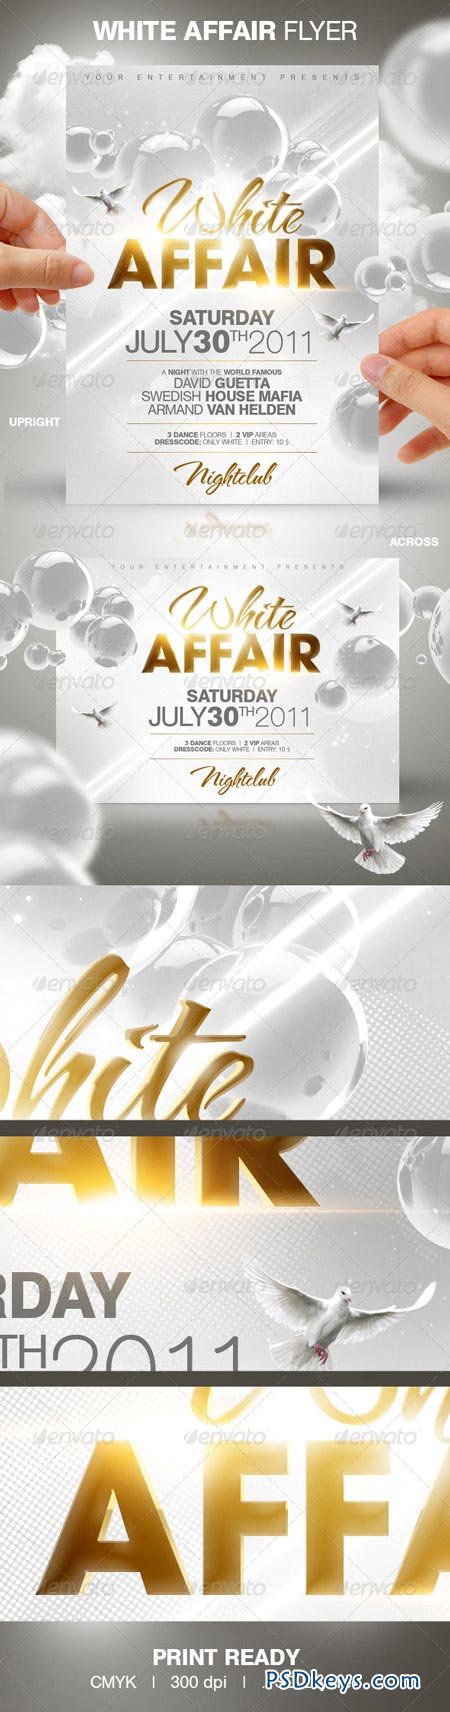 White Affair Party Flyer 151299